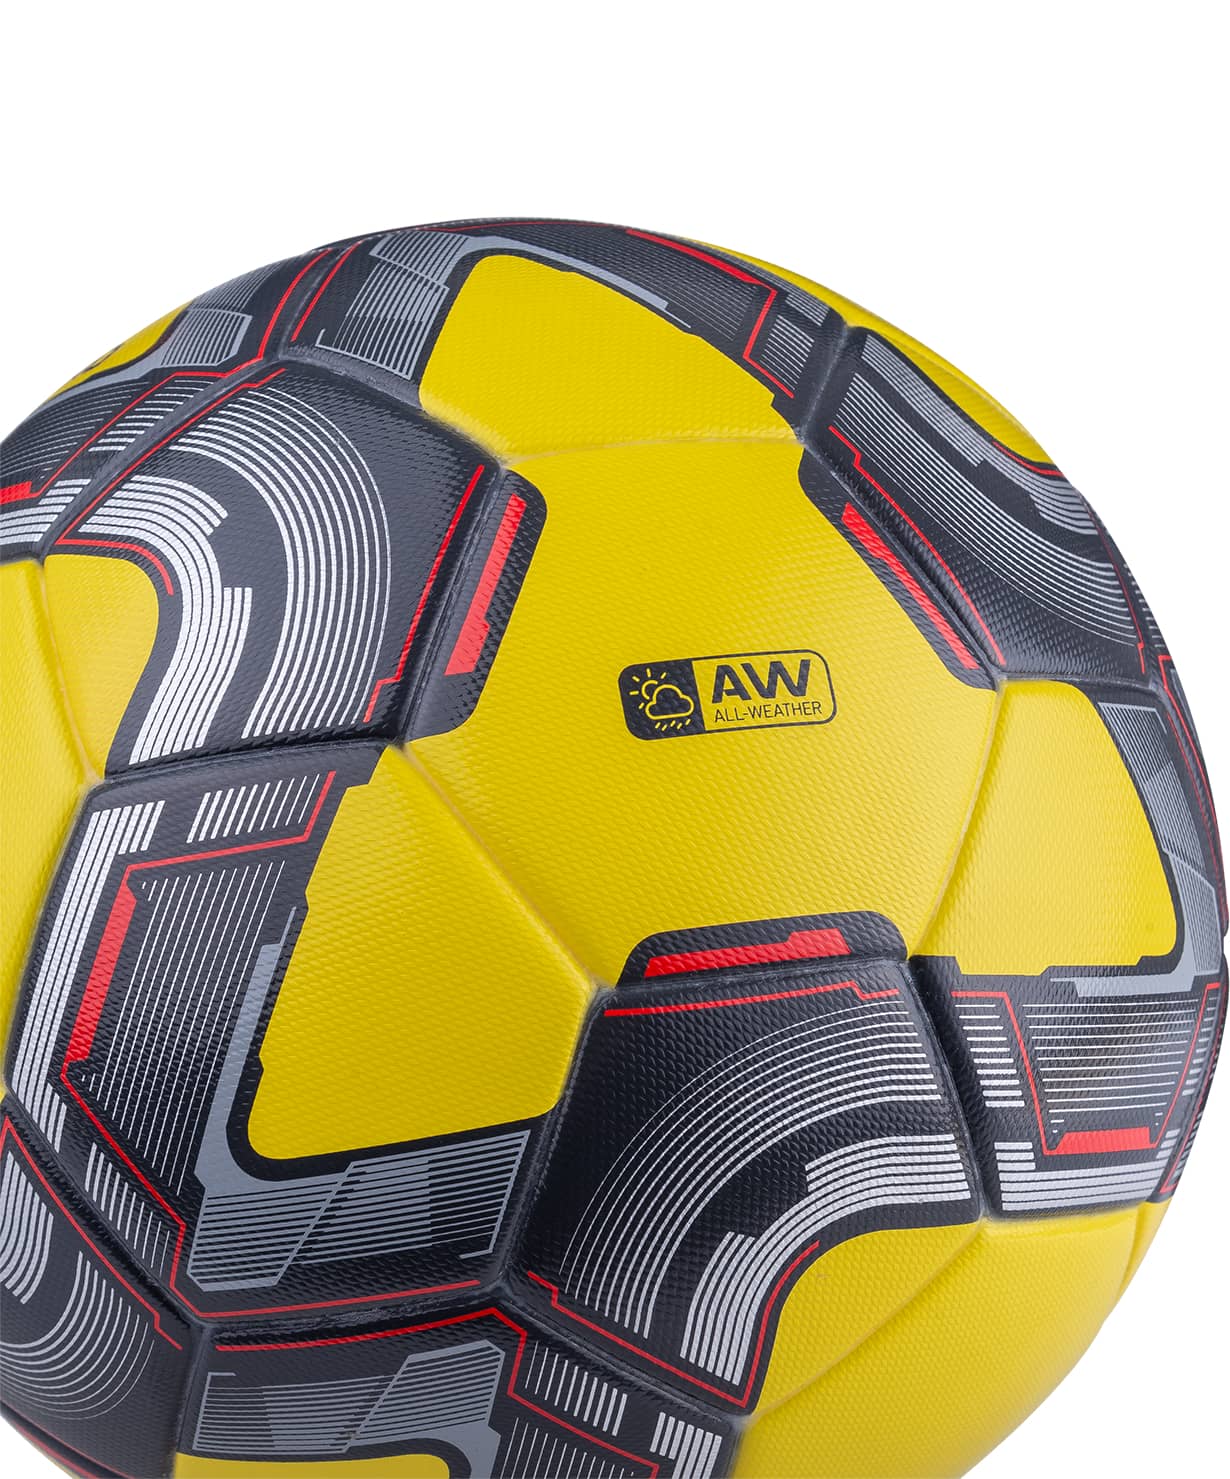 фото Jögel GRAND мяч футбольный желтый размер 5 Football-54 